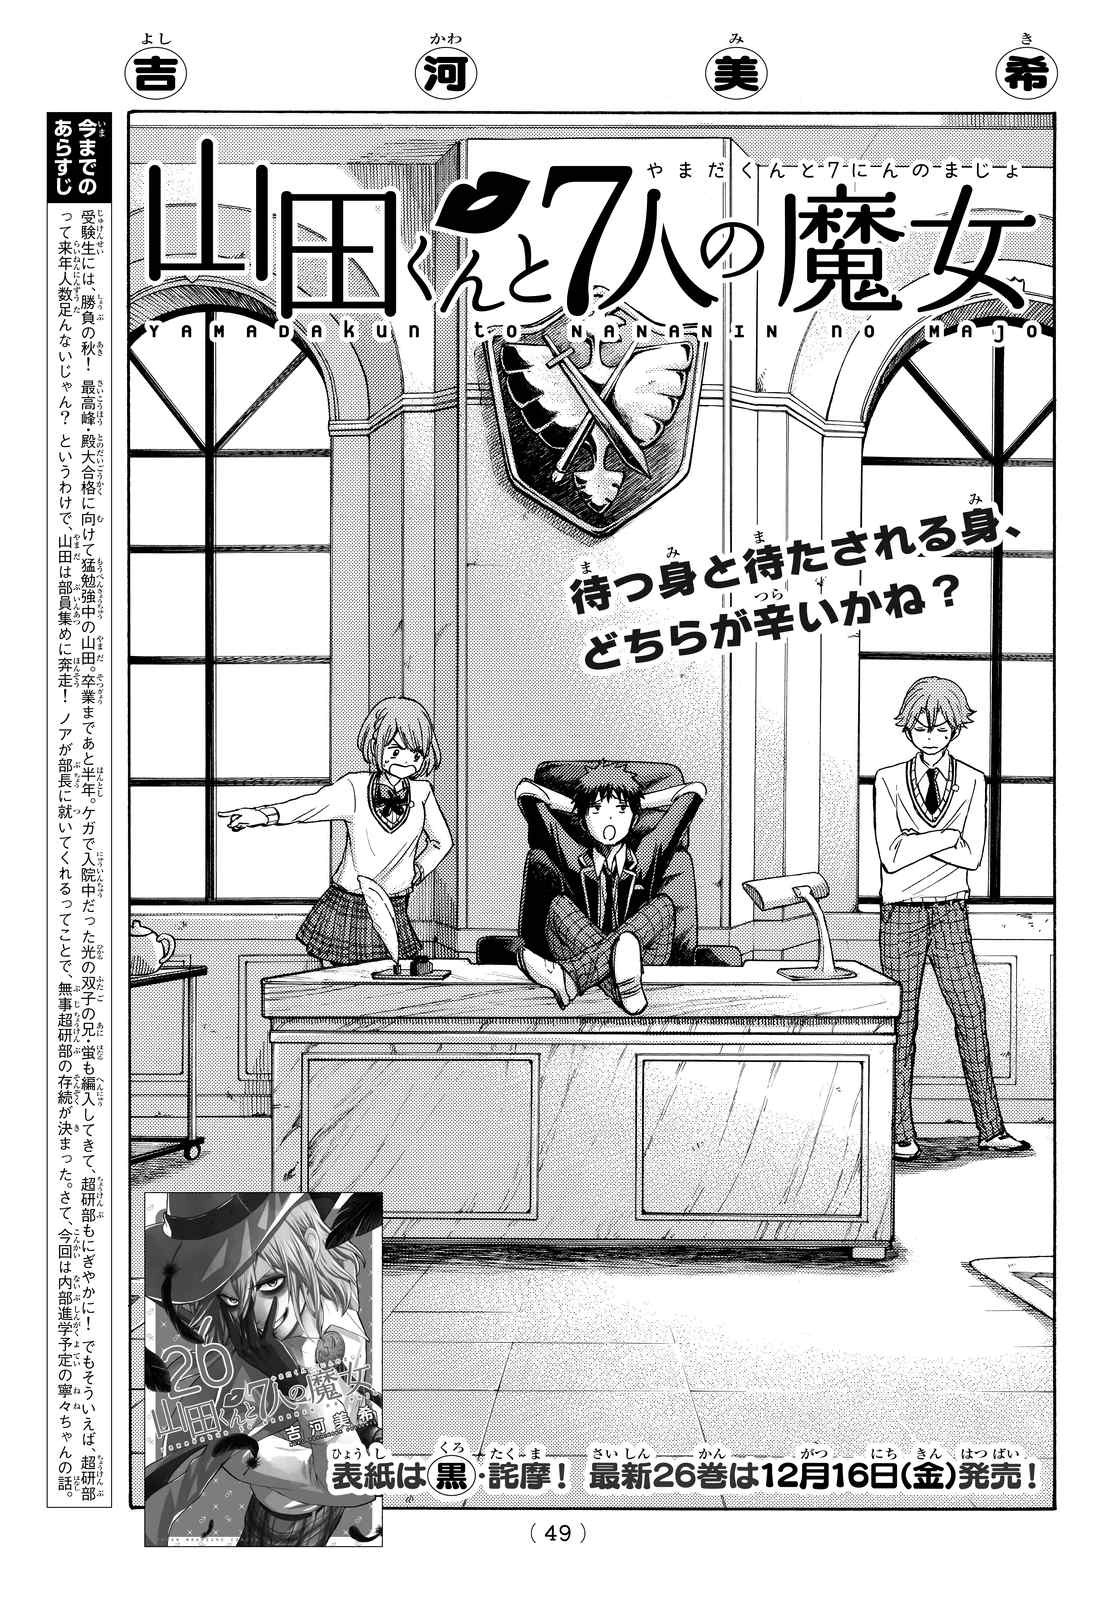 Yamada-kun to 7-nin no Majo - Chapter 233 - Page 1